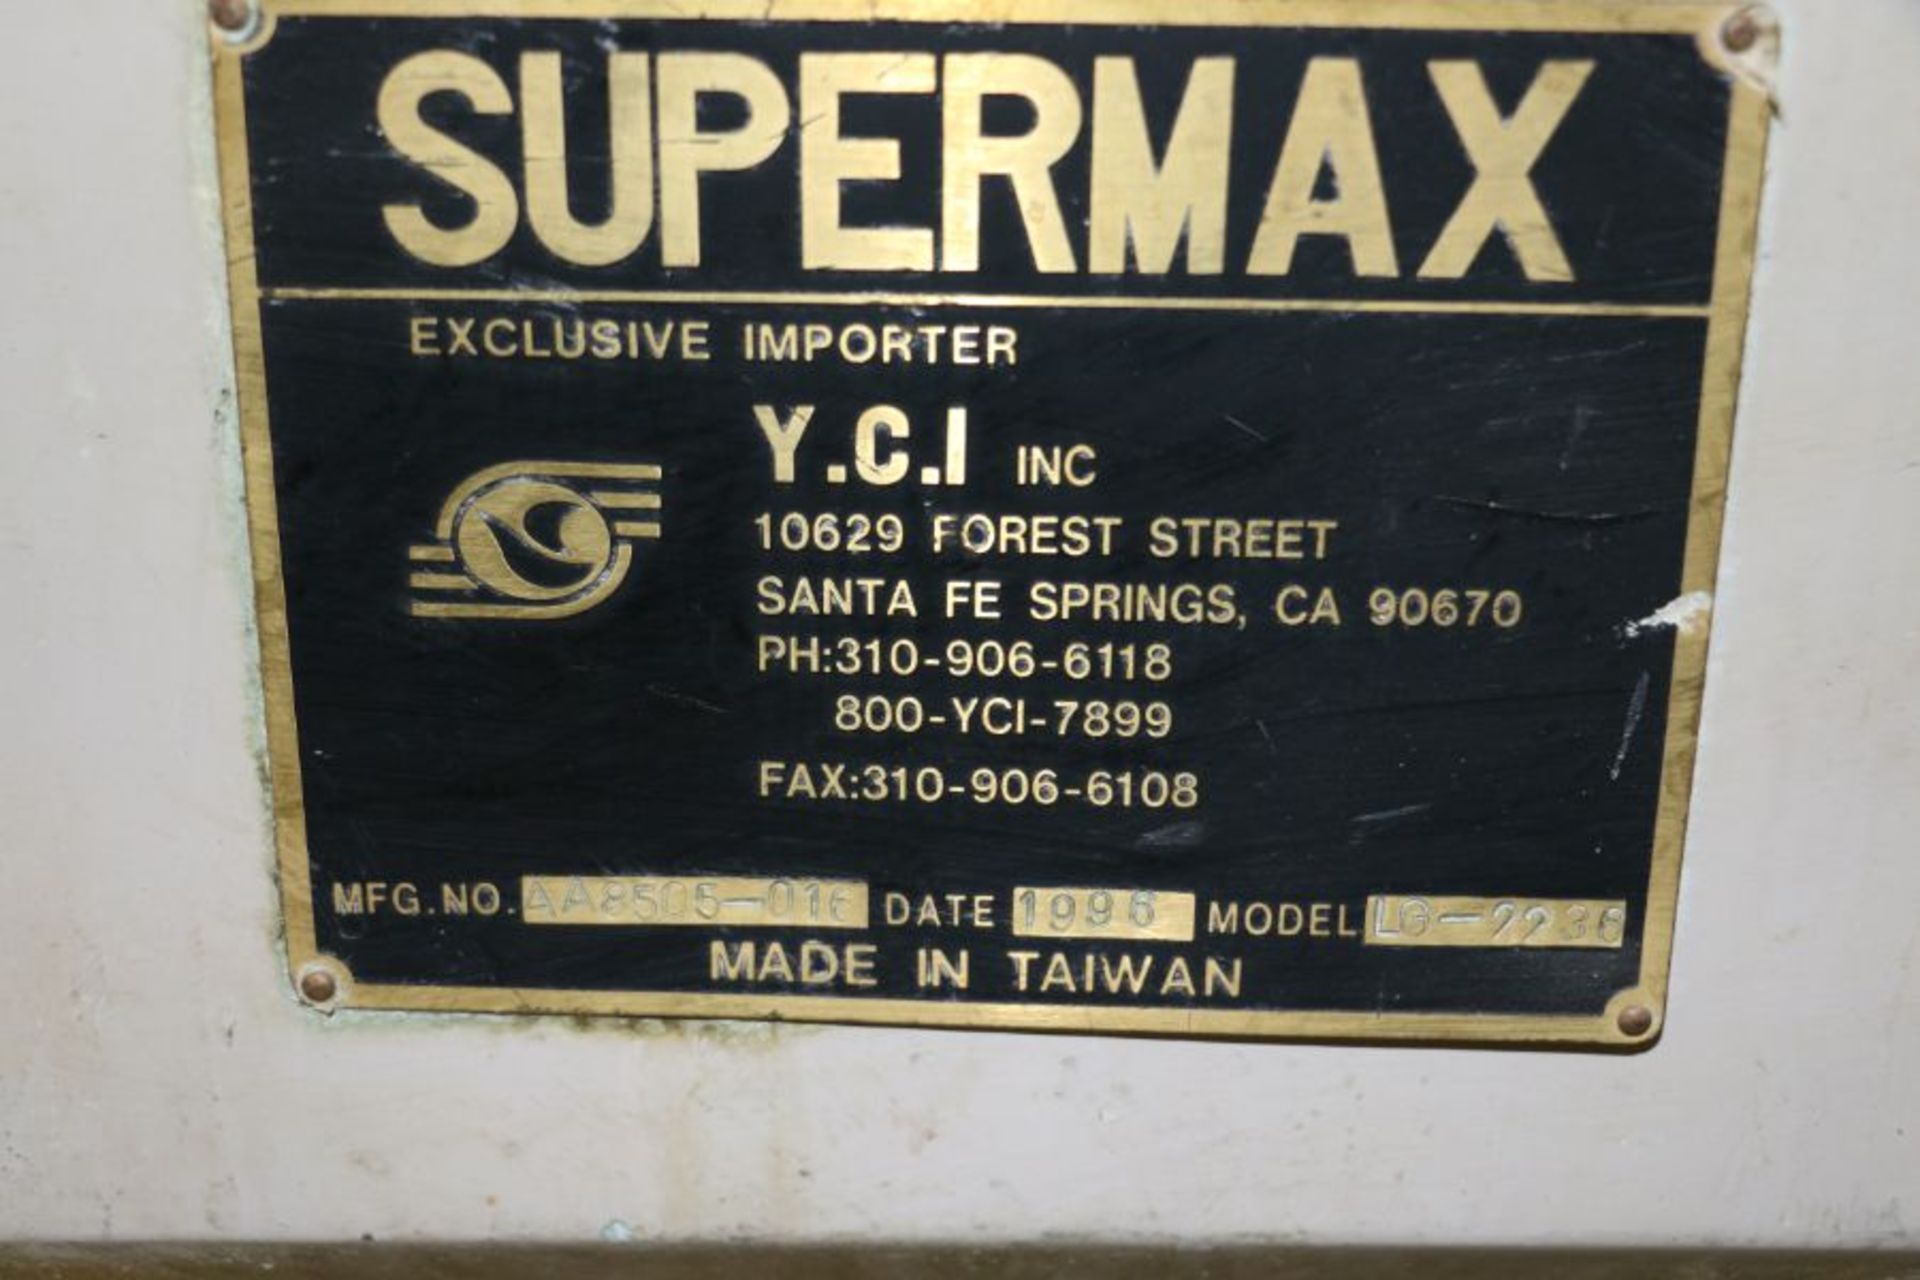 Supermax LG-2236 Gap Bed Engine Lathe,11" 3 Jaw Chuck, 3" Bore, Sony Acu-Rite DRO, s/n AA8505-016, - Image 7 of 7